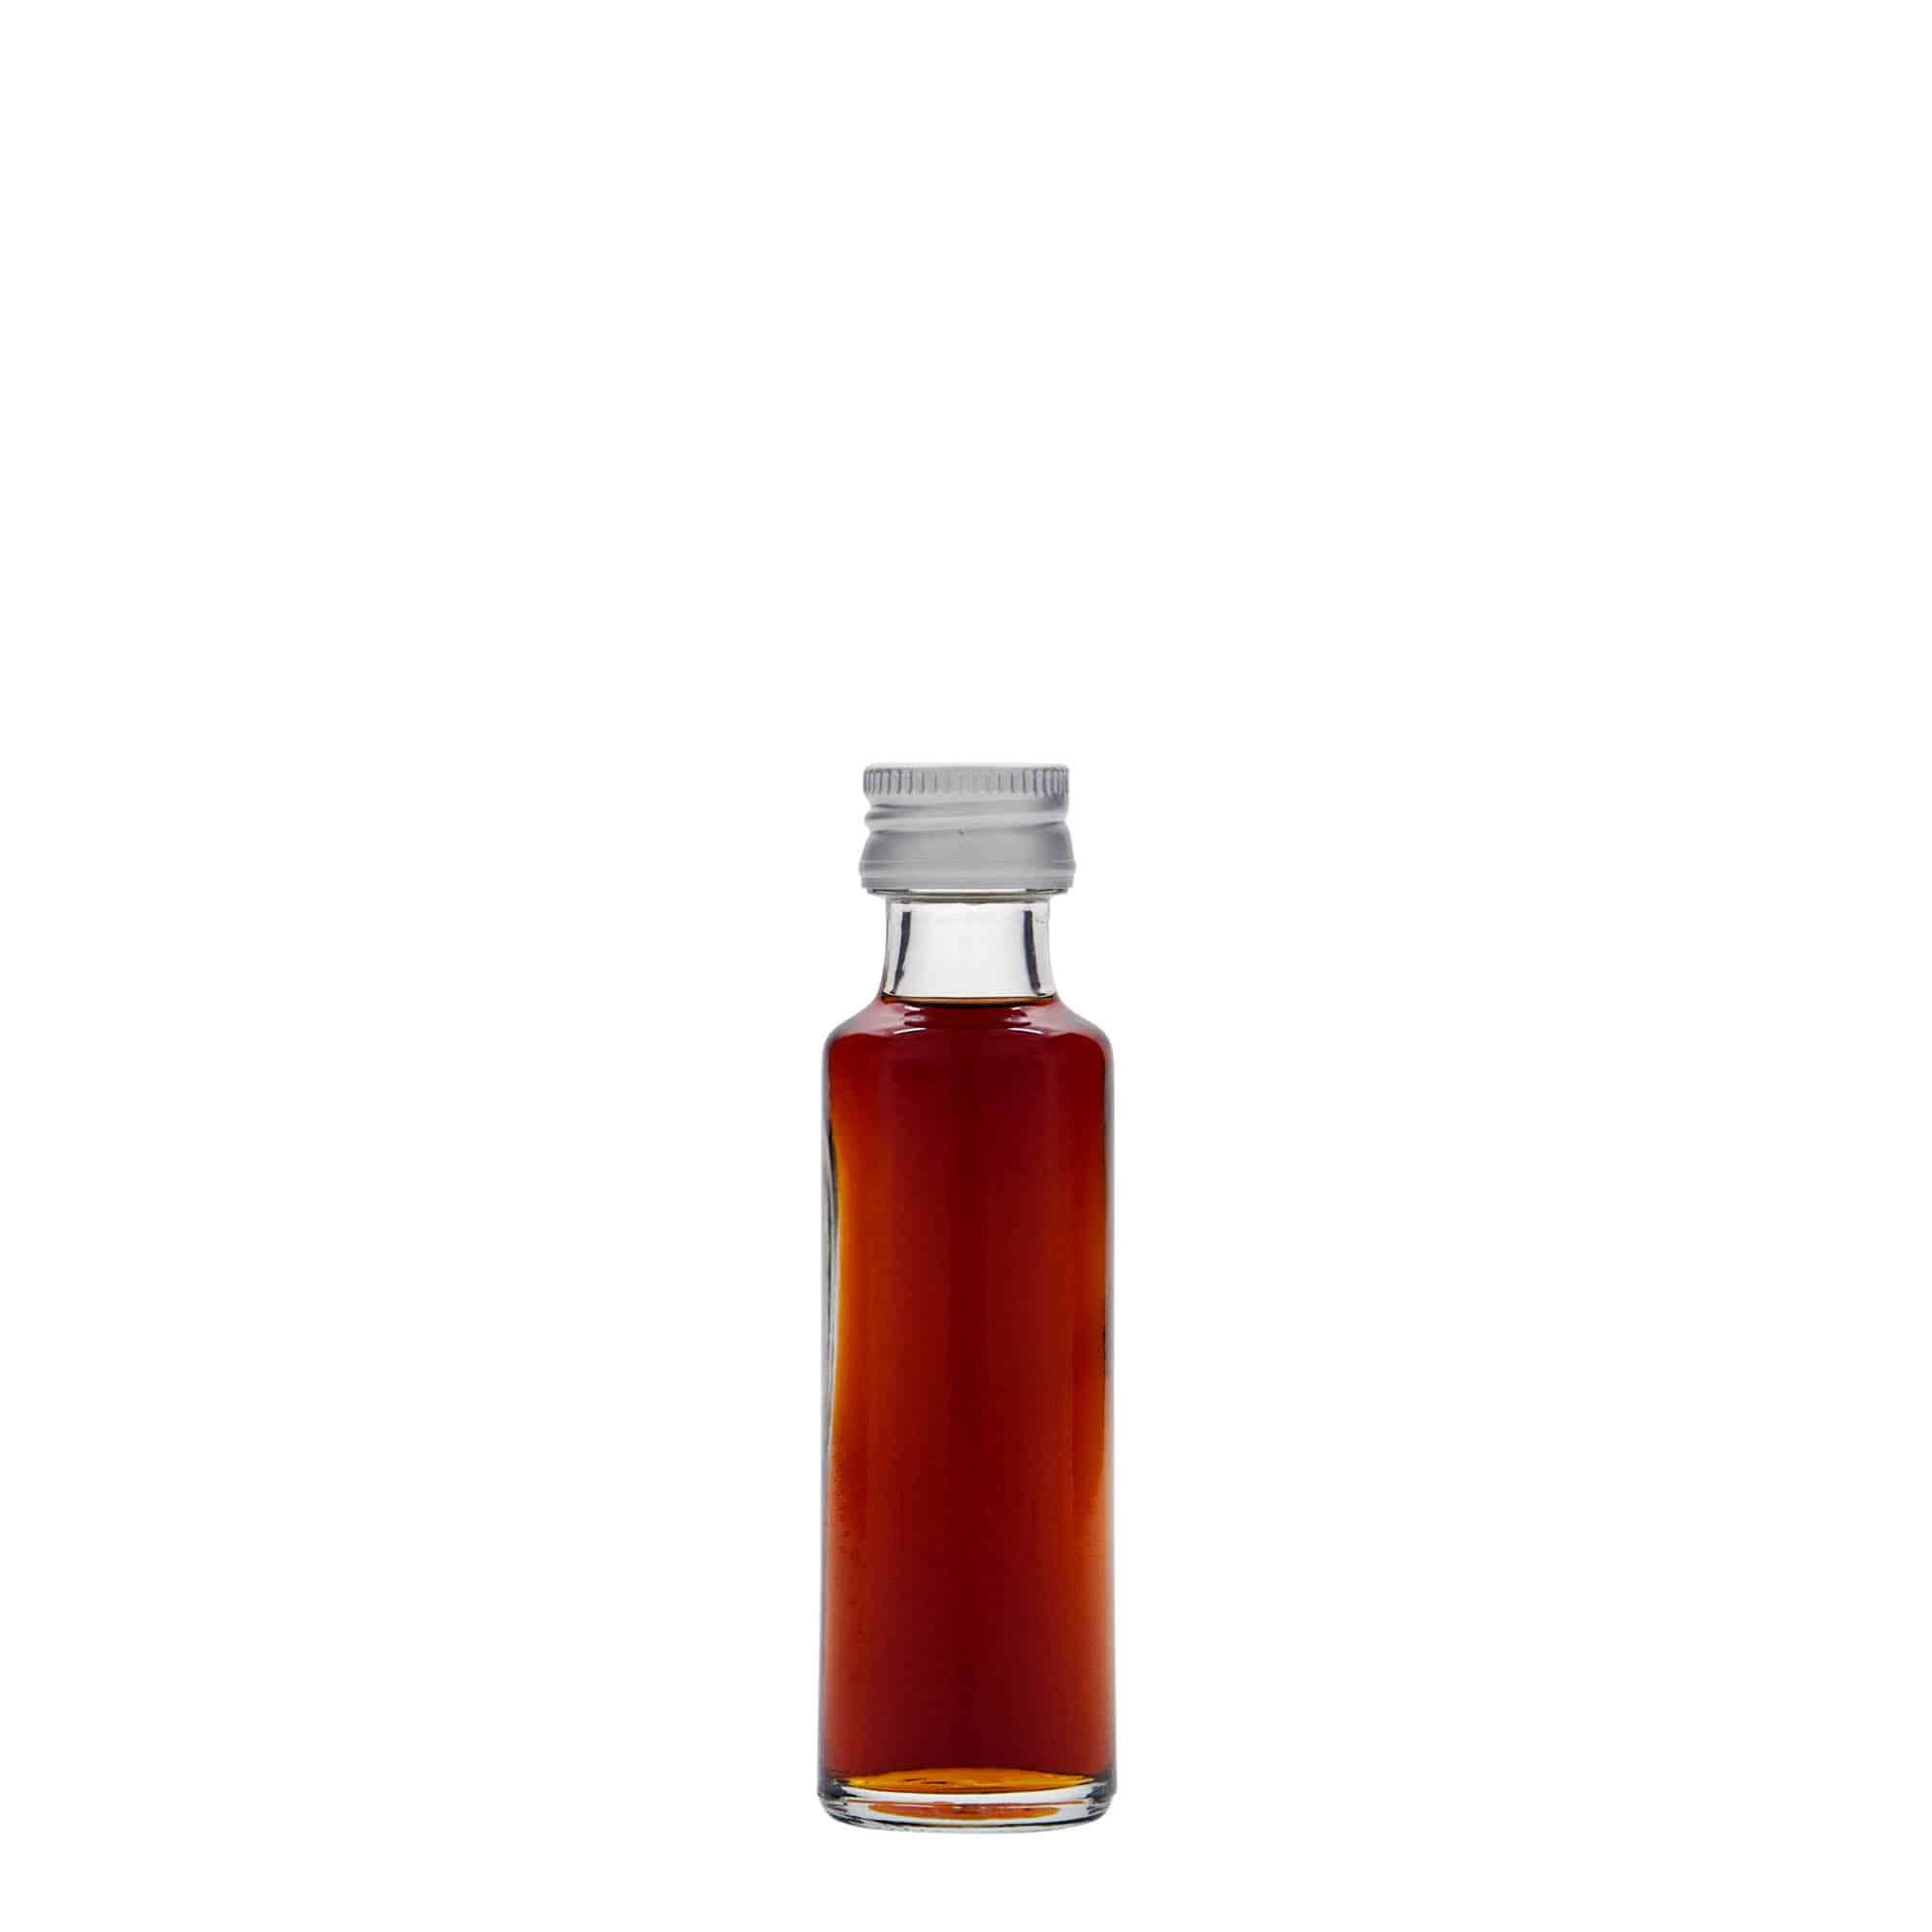 20 ml glass bottle 'Dorica', closure: PP 18